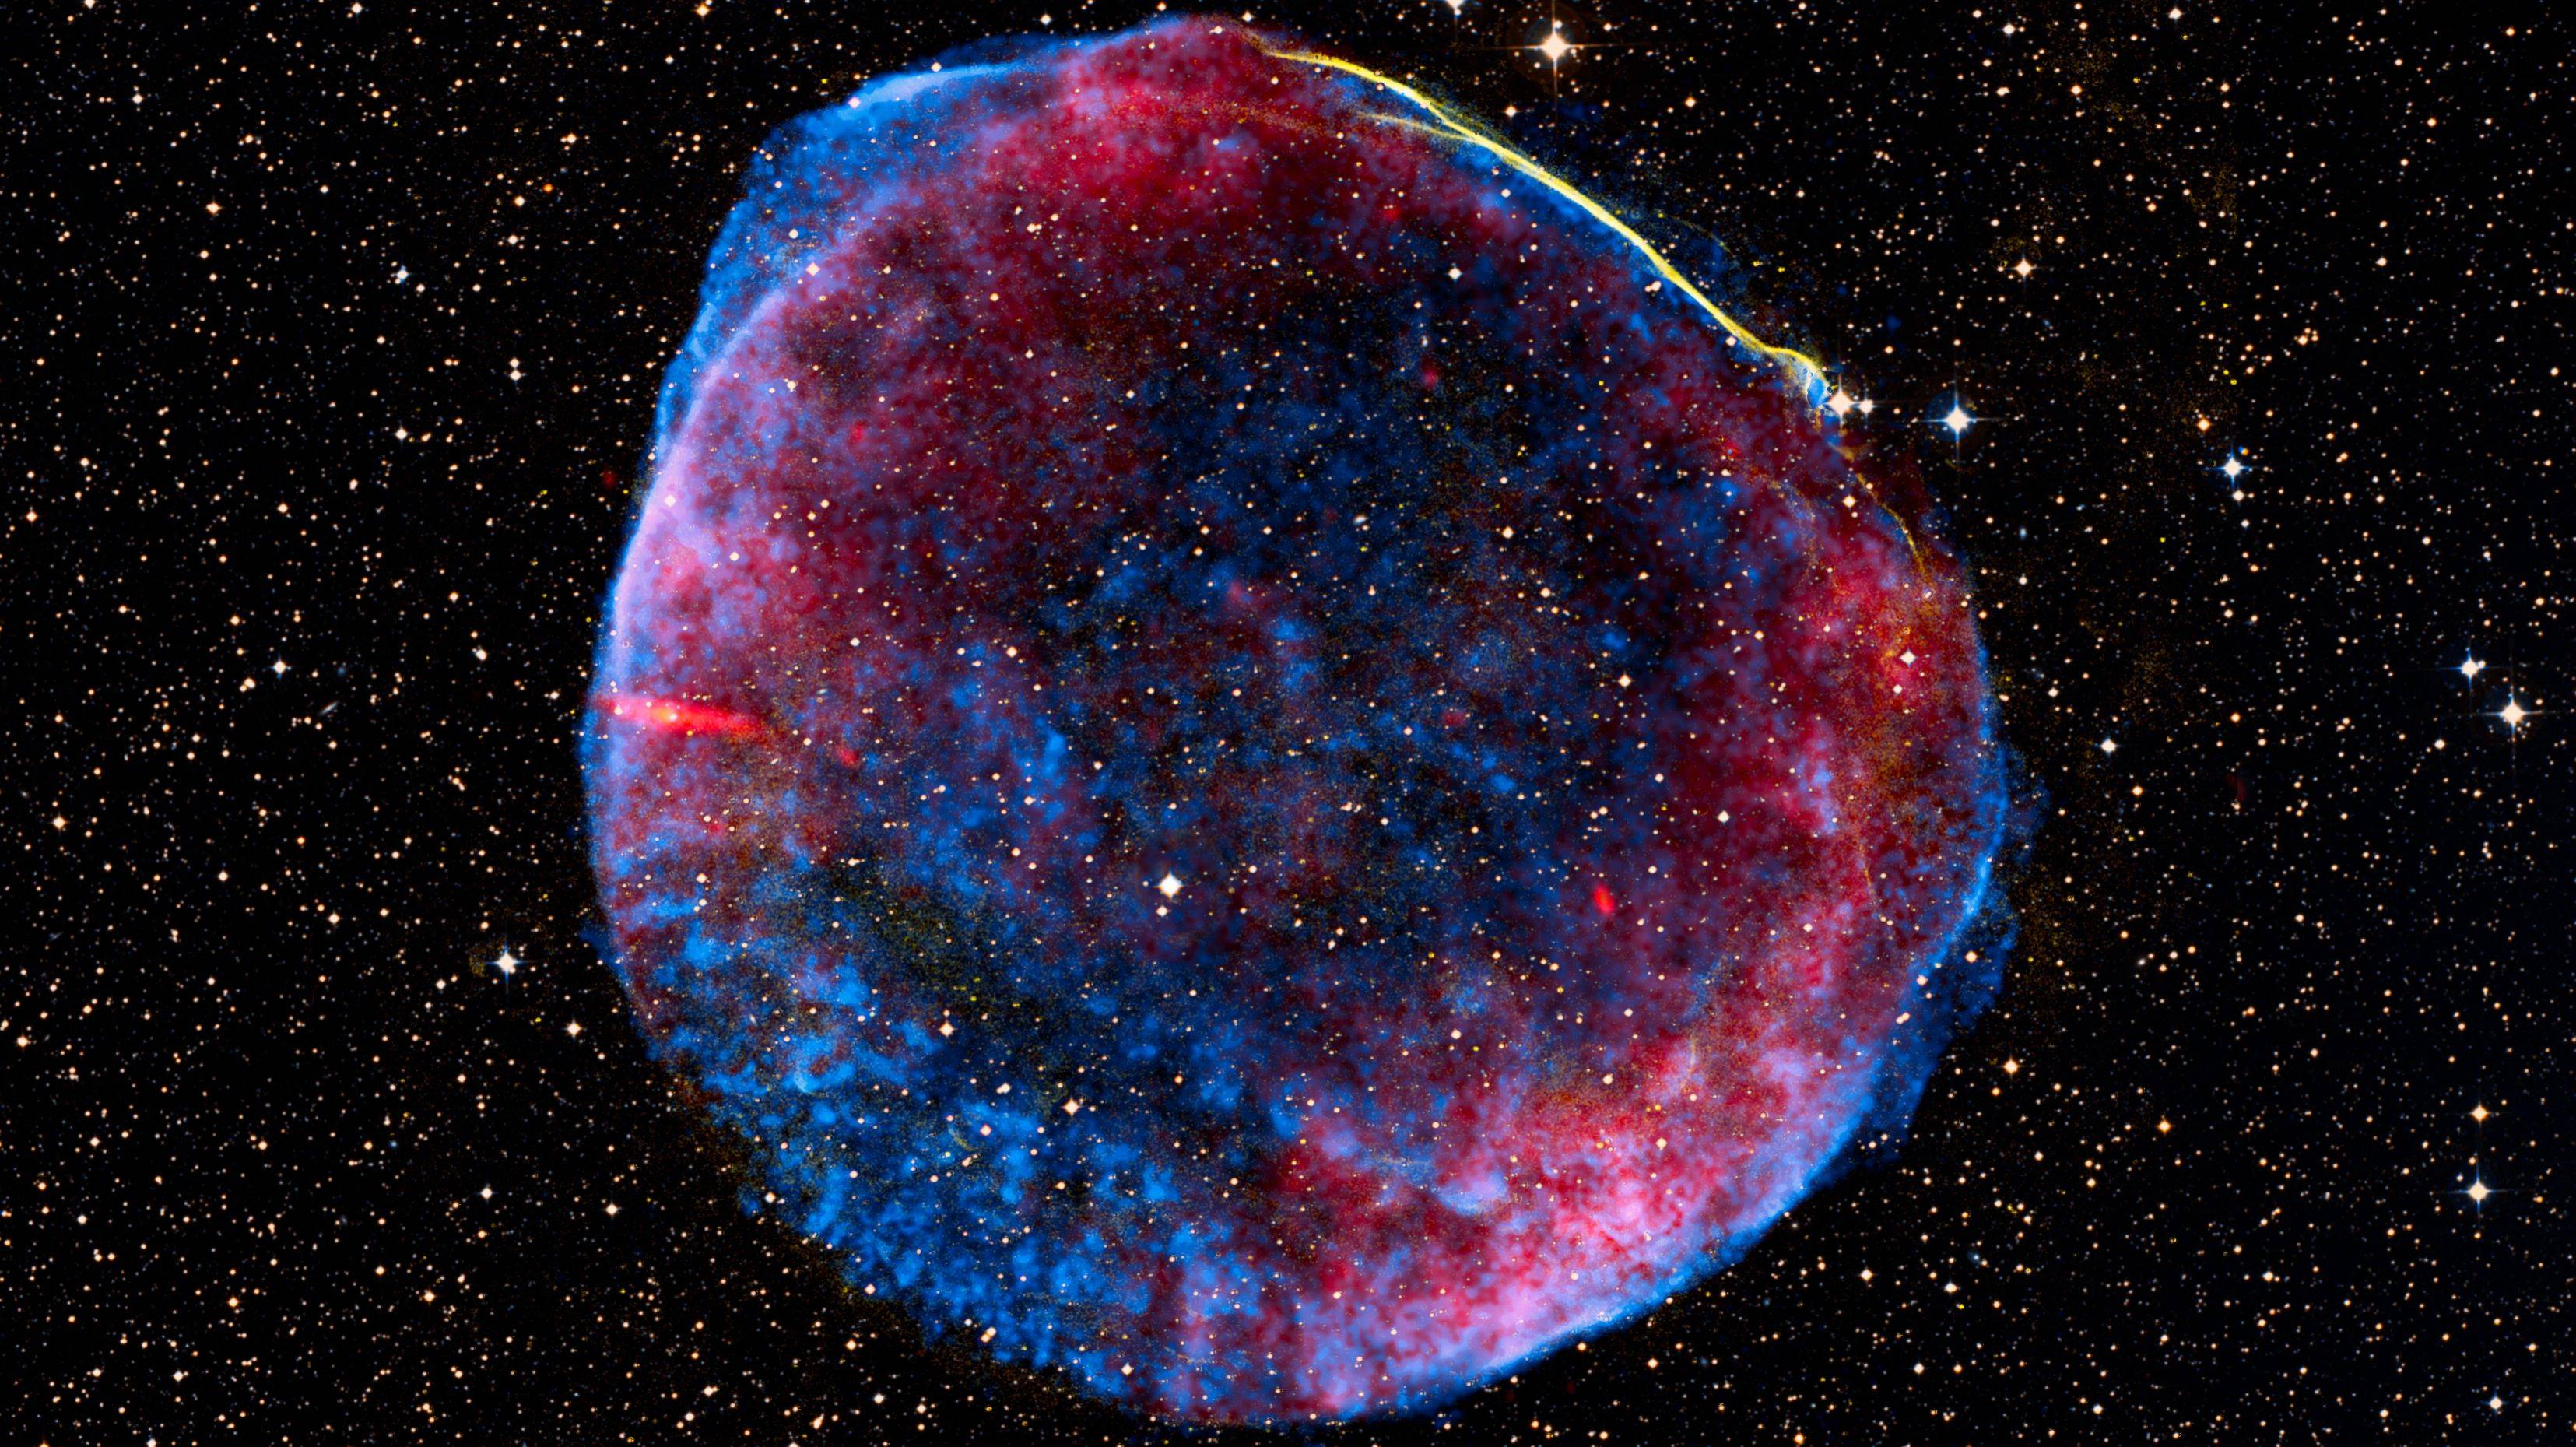 Tycho's Supernova